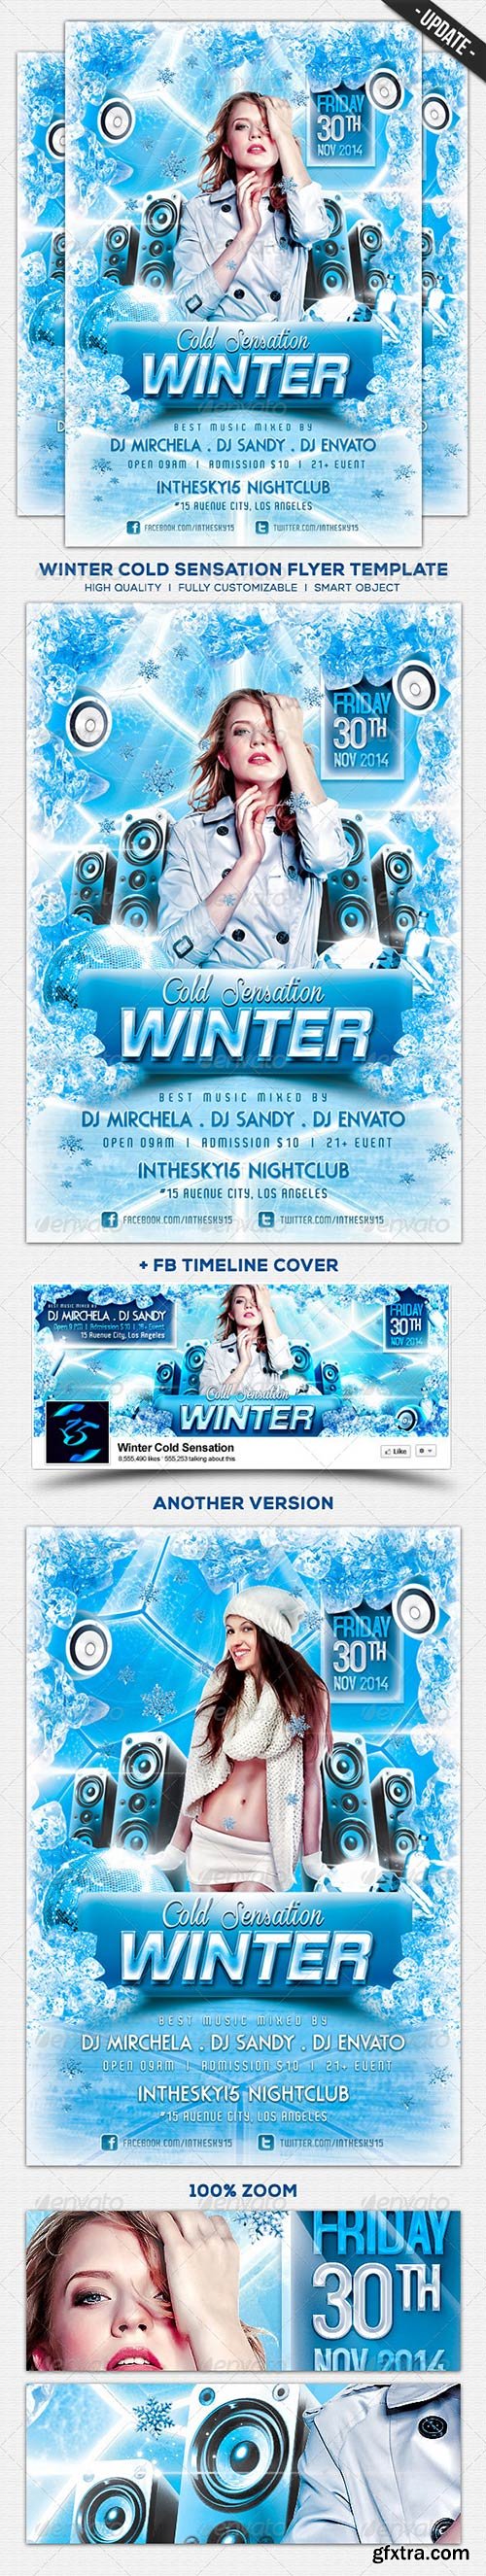 GraphicRiver - Winter Cold Sensation Flyer Template 3442261